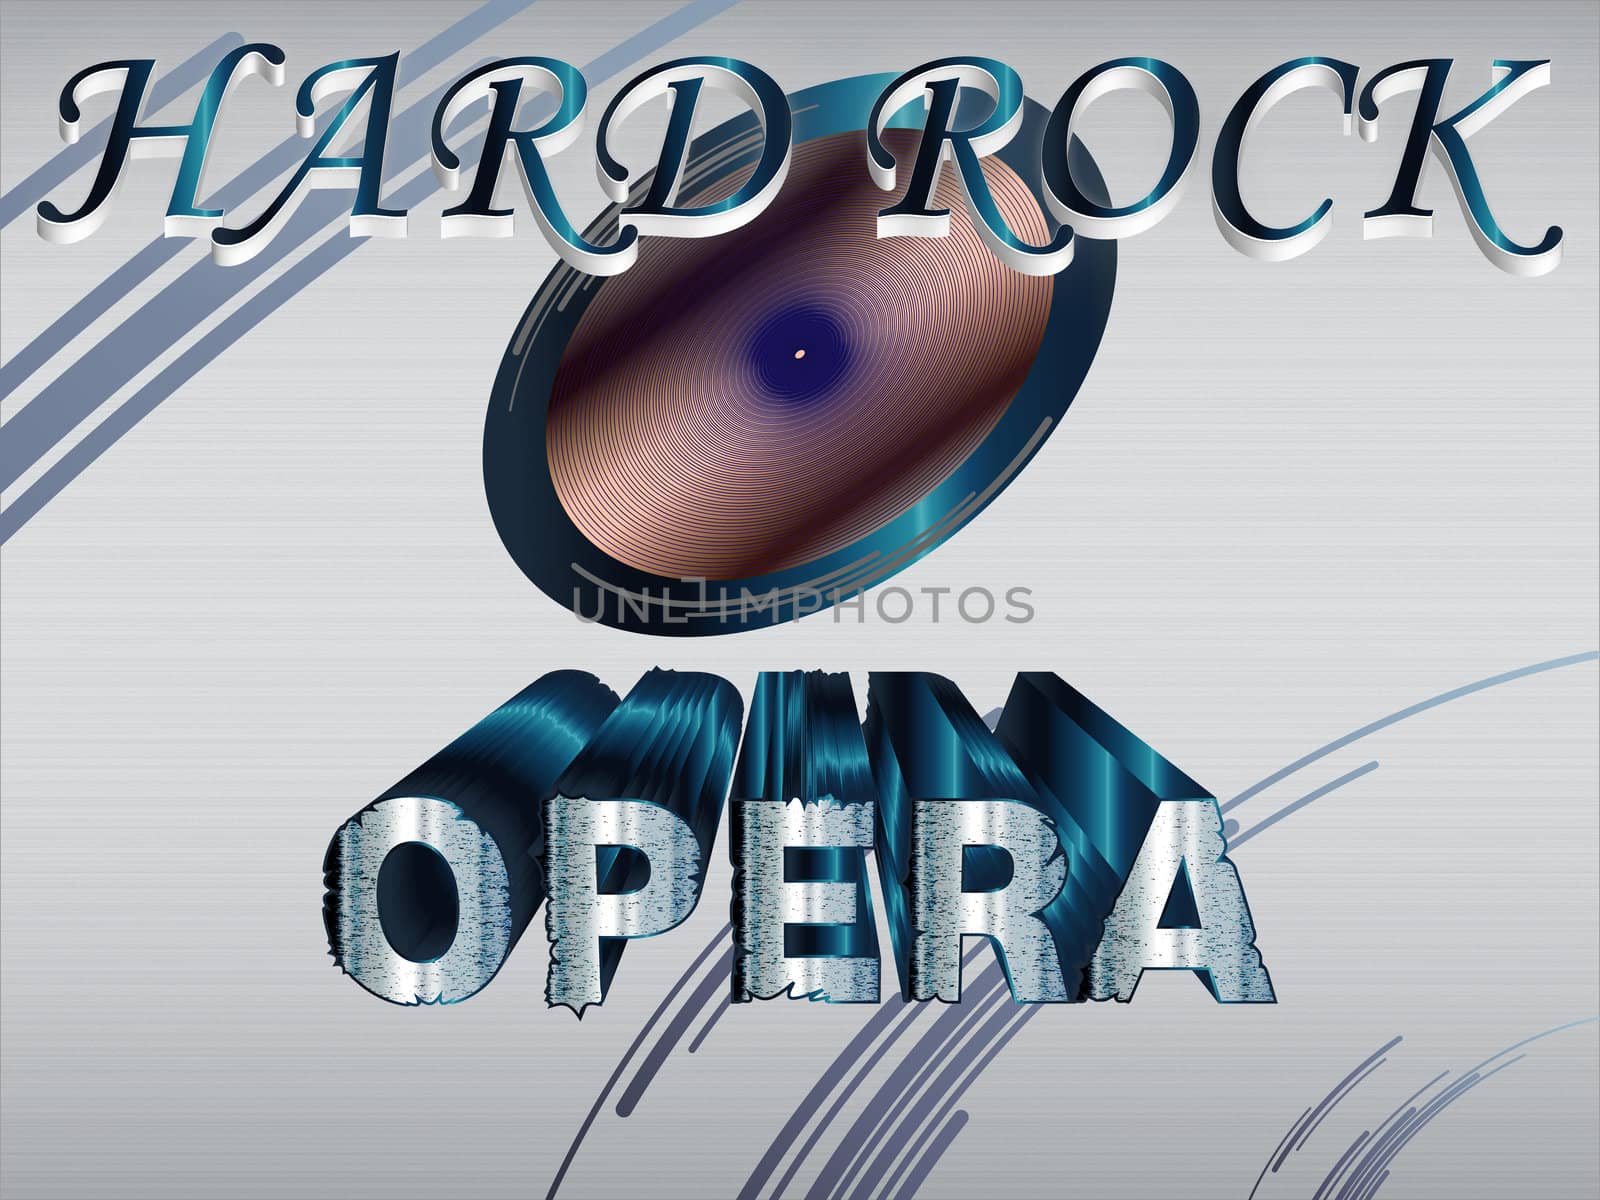 Hard Rock background 3D symbol with metallic elements